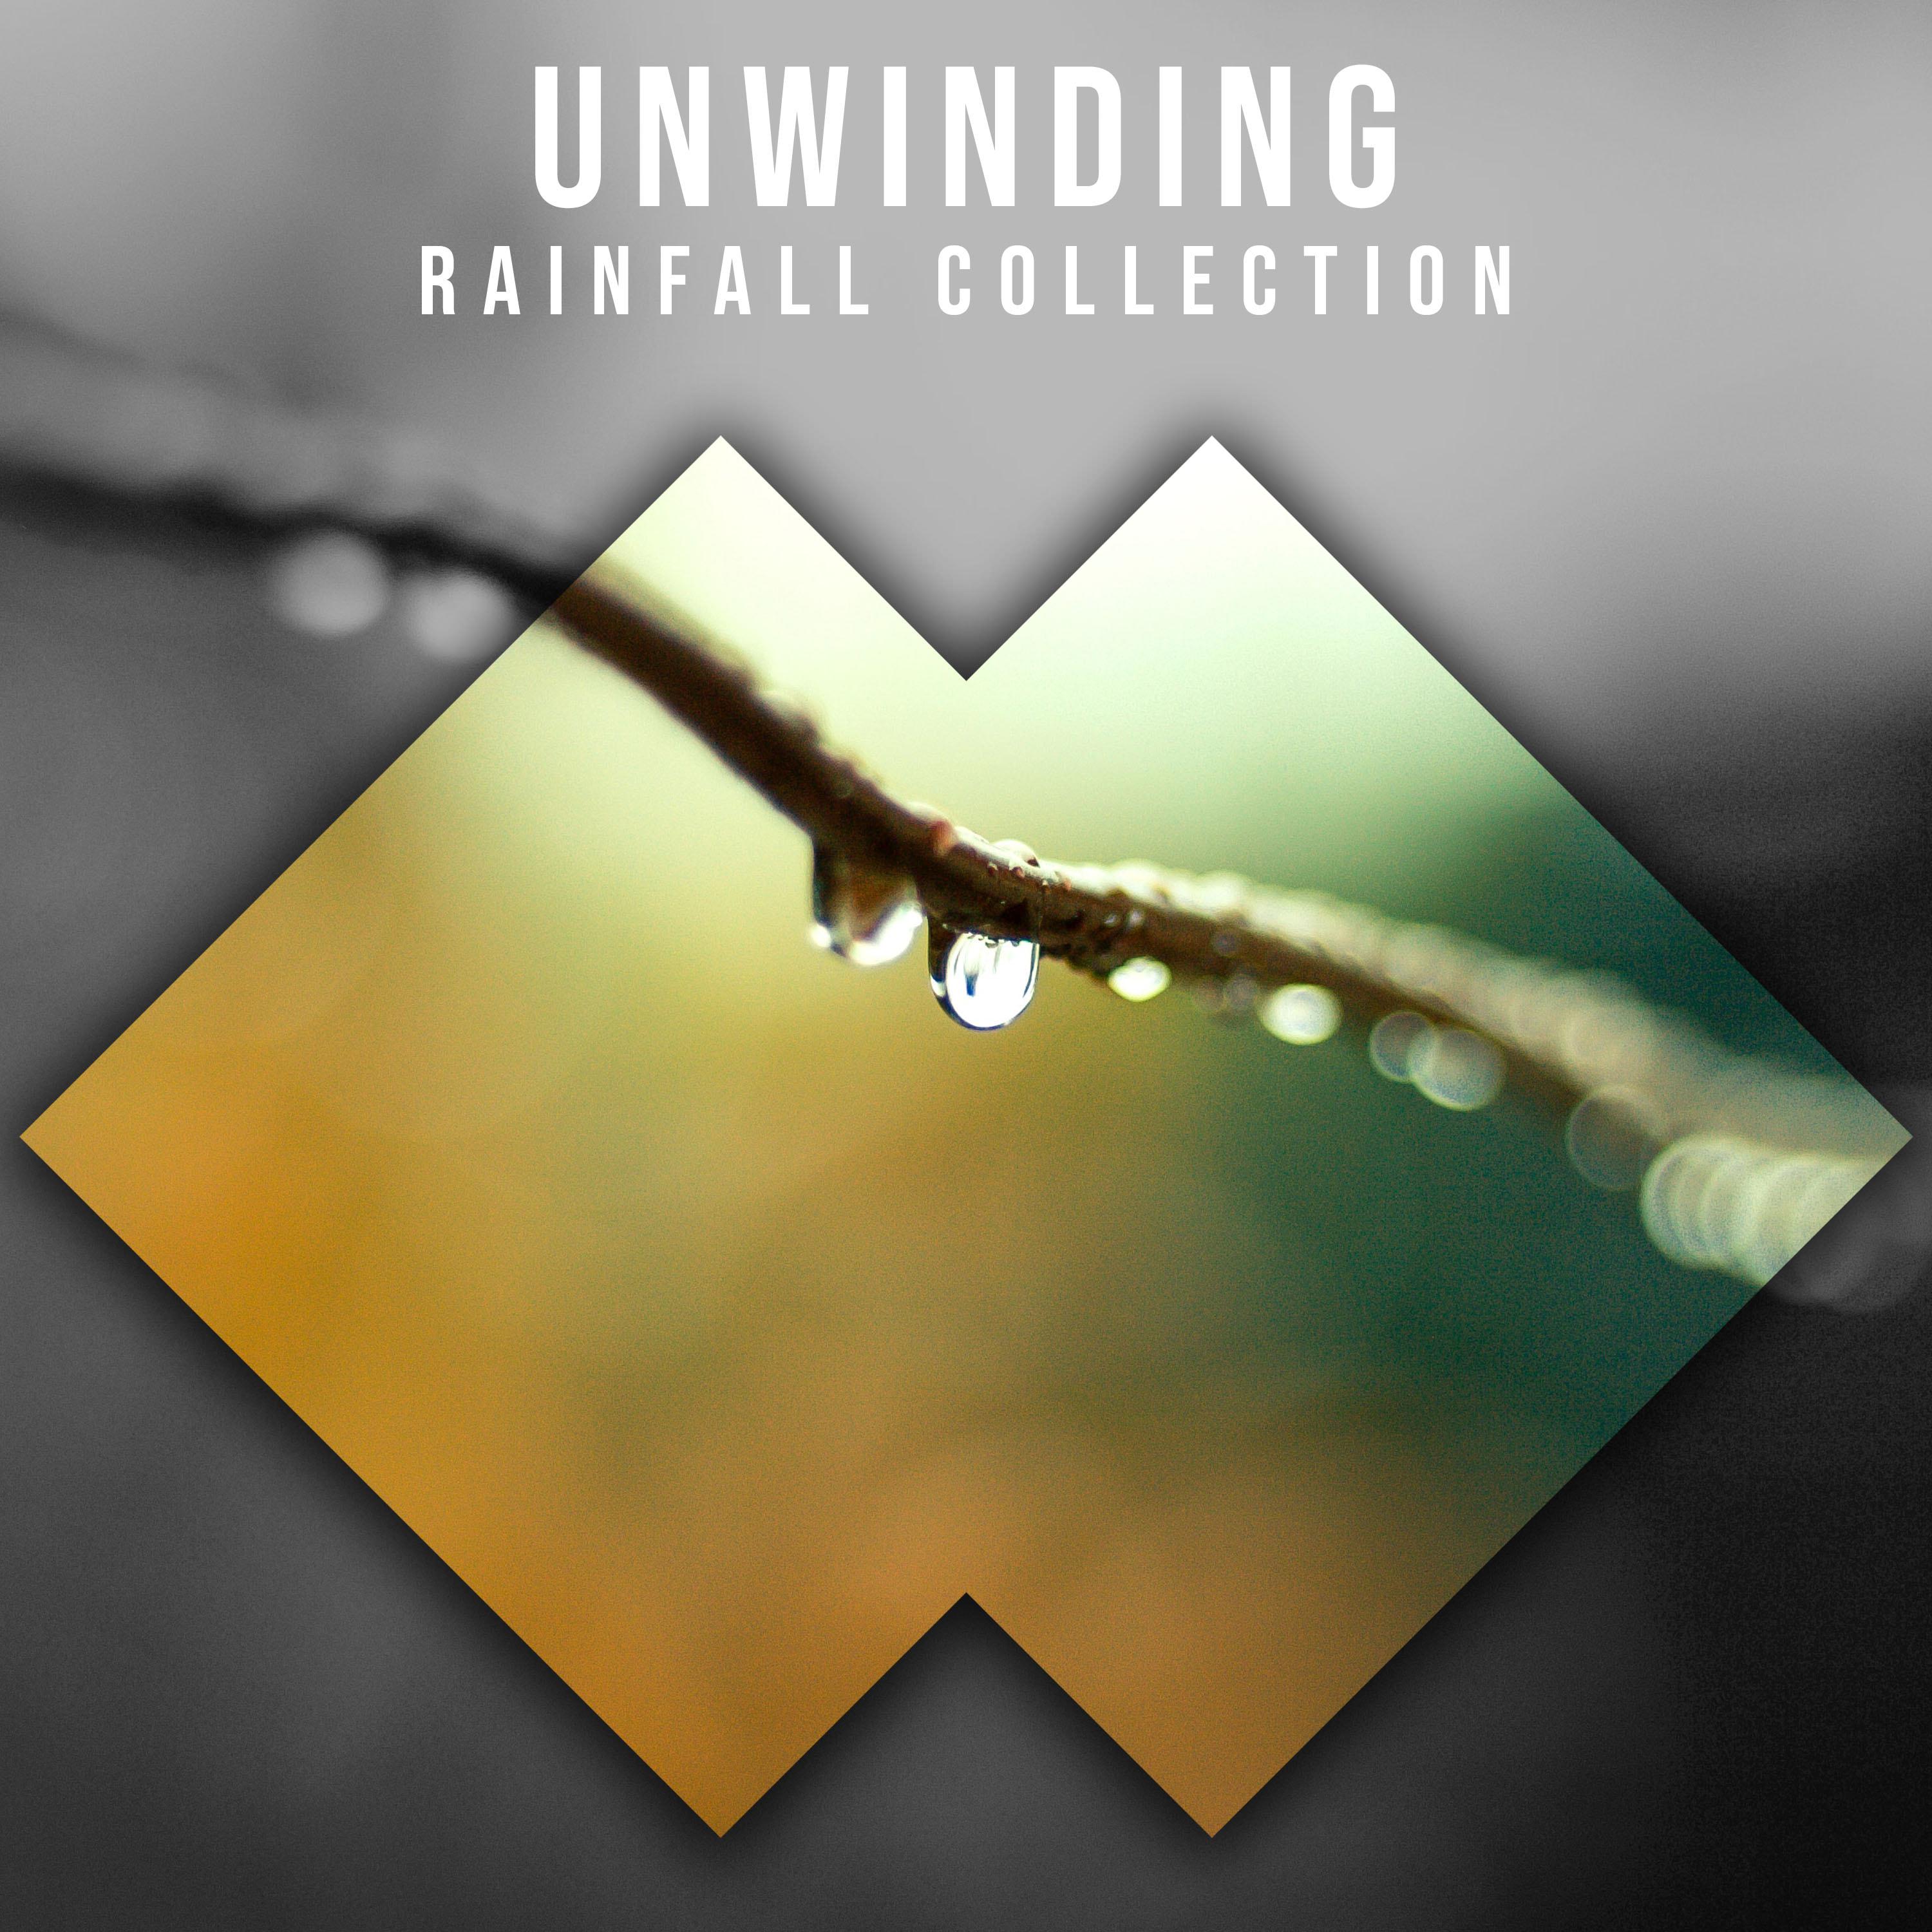 #1 Hour of Unwinding Rainfall Collection